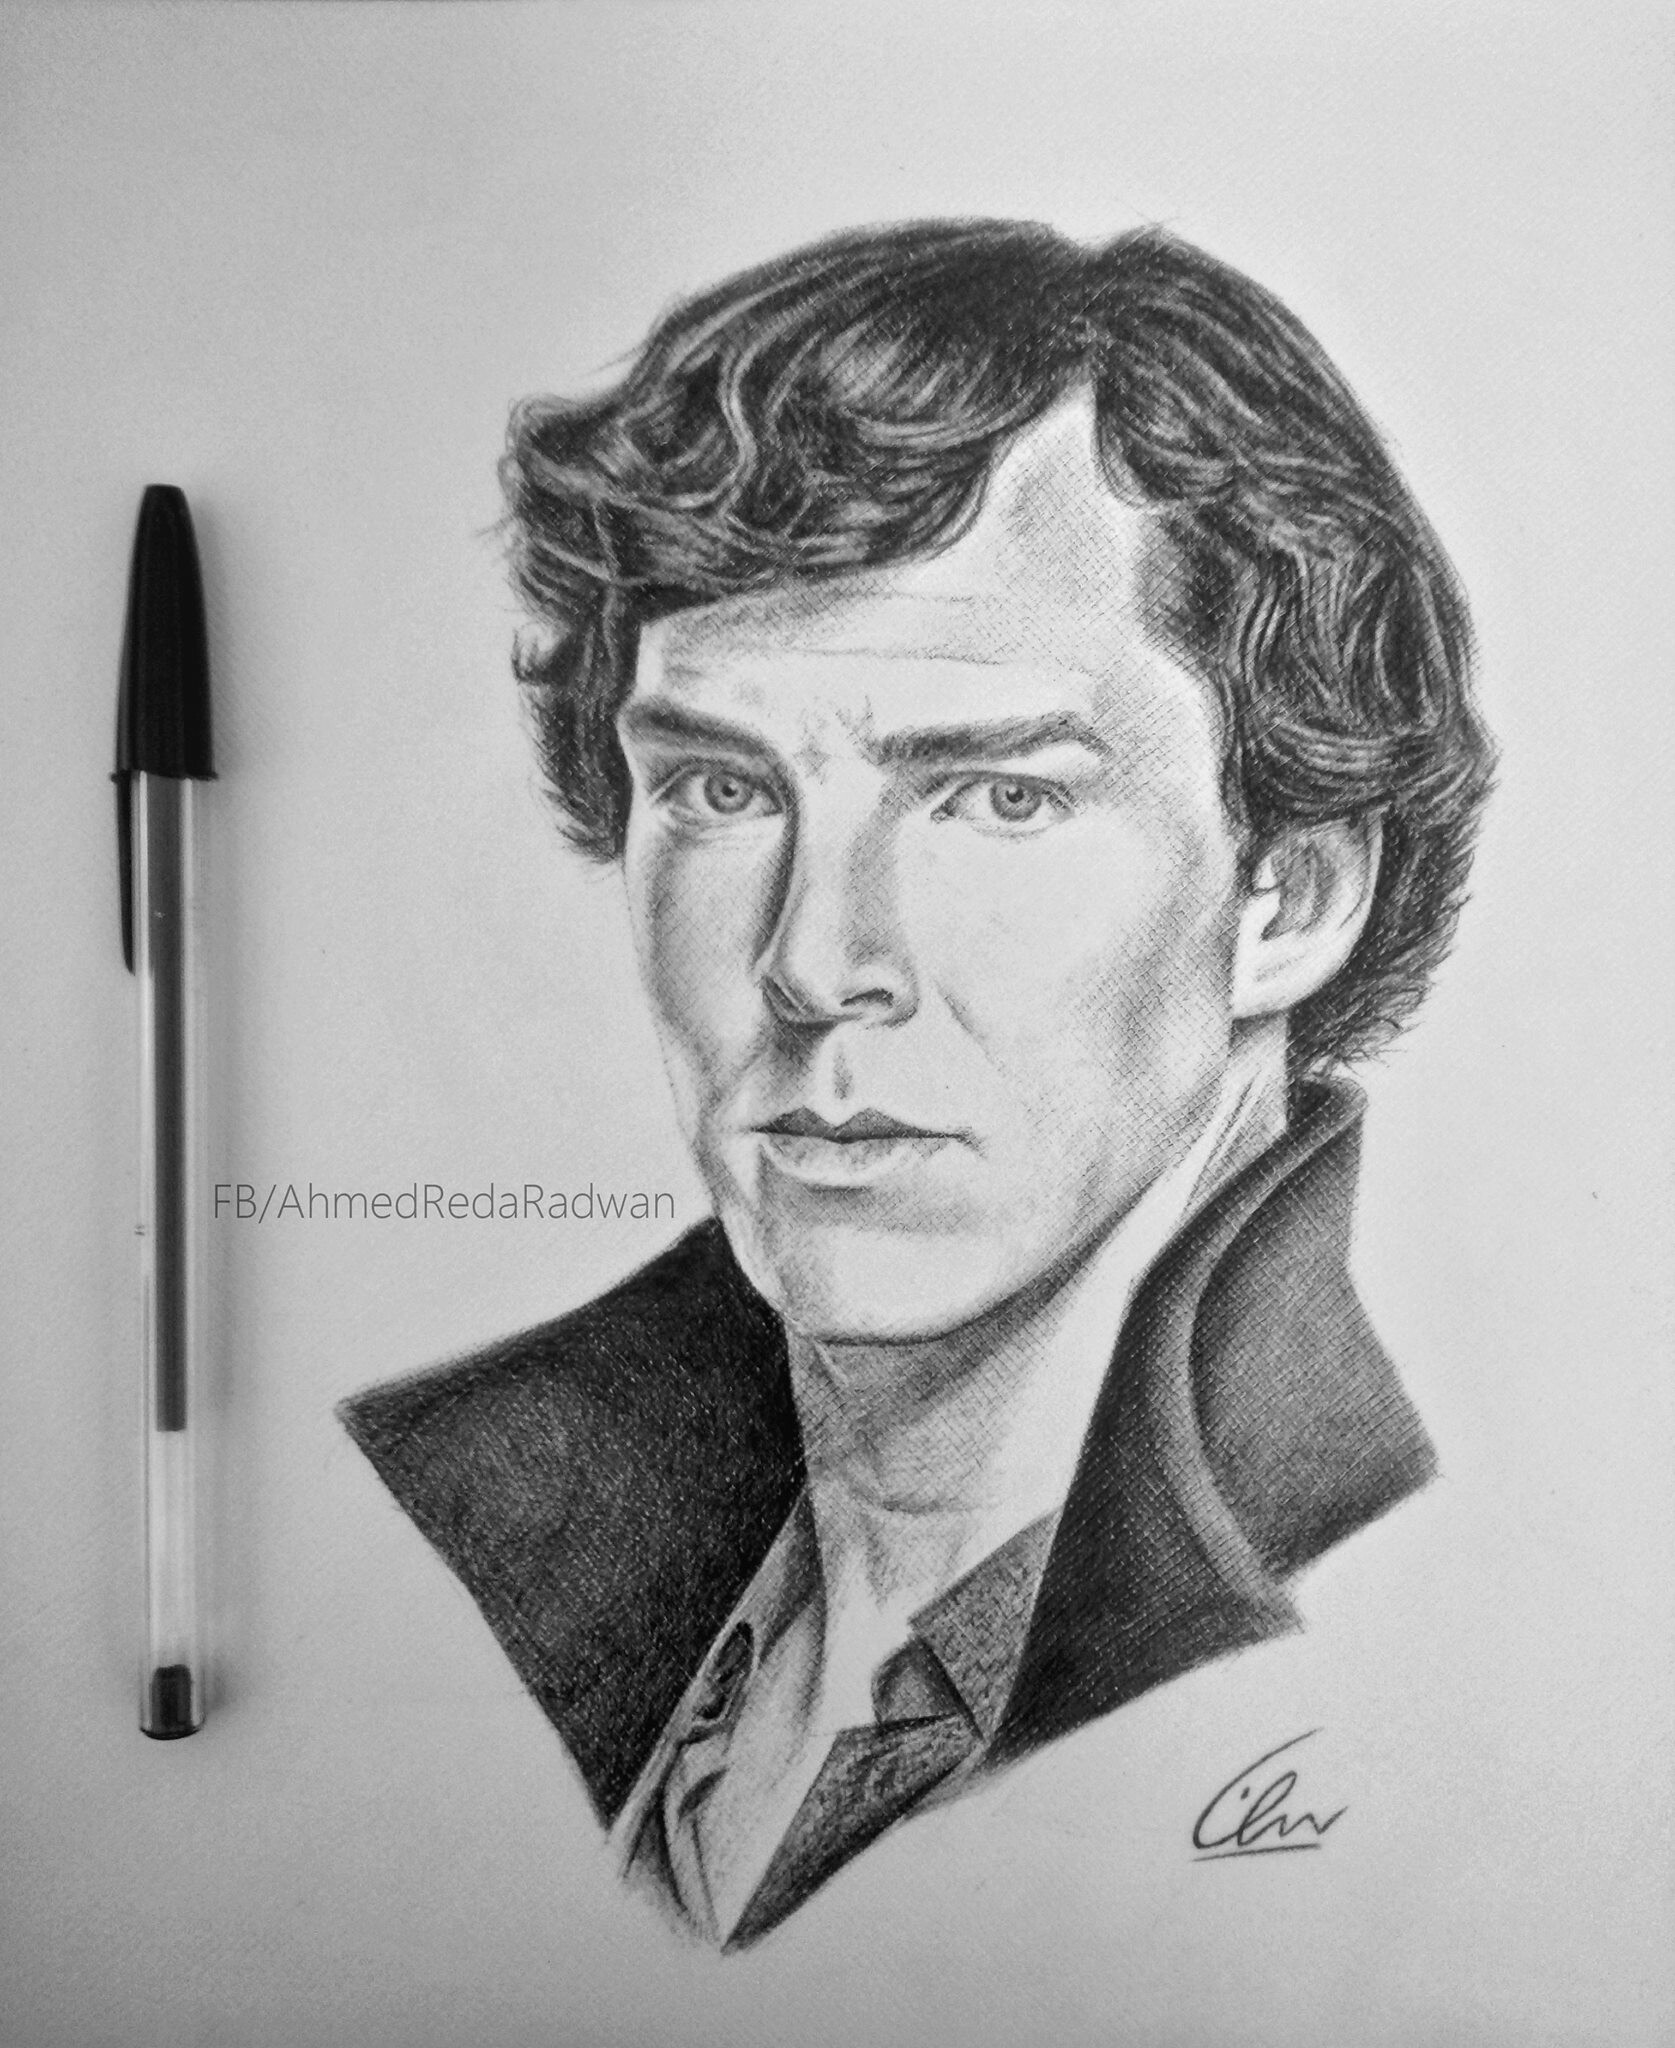 Sherlock sketches by bbshrimp on DeviantArt